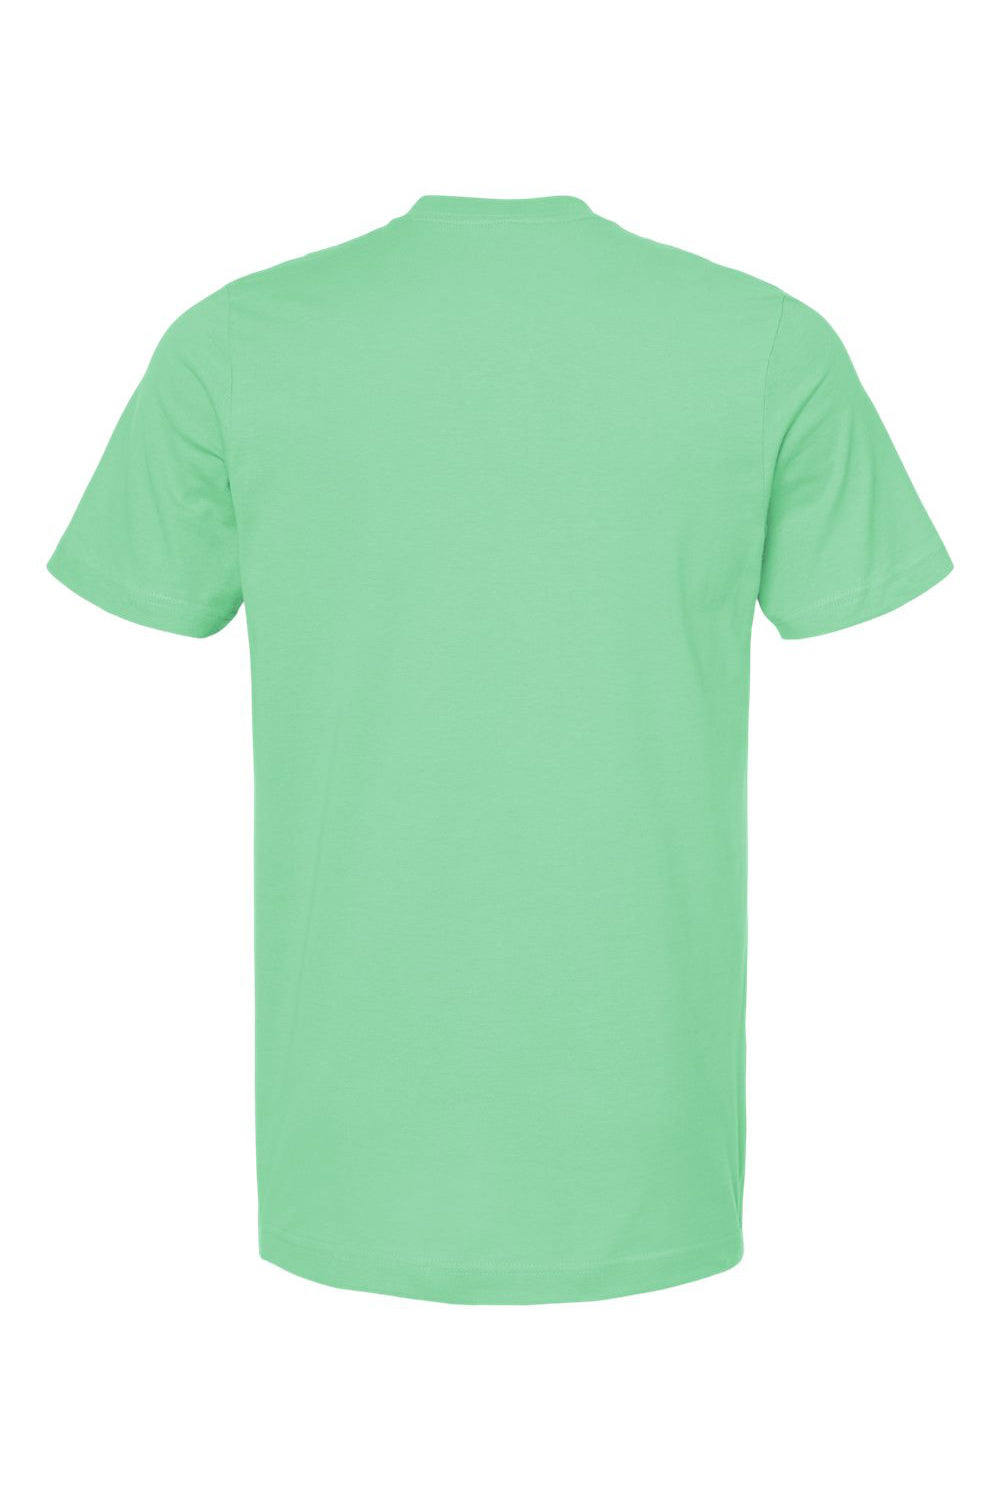 Tultex 602 Mens Short Sleeve Crewneck T-Shirt Light Mint Green Flat Back